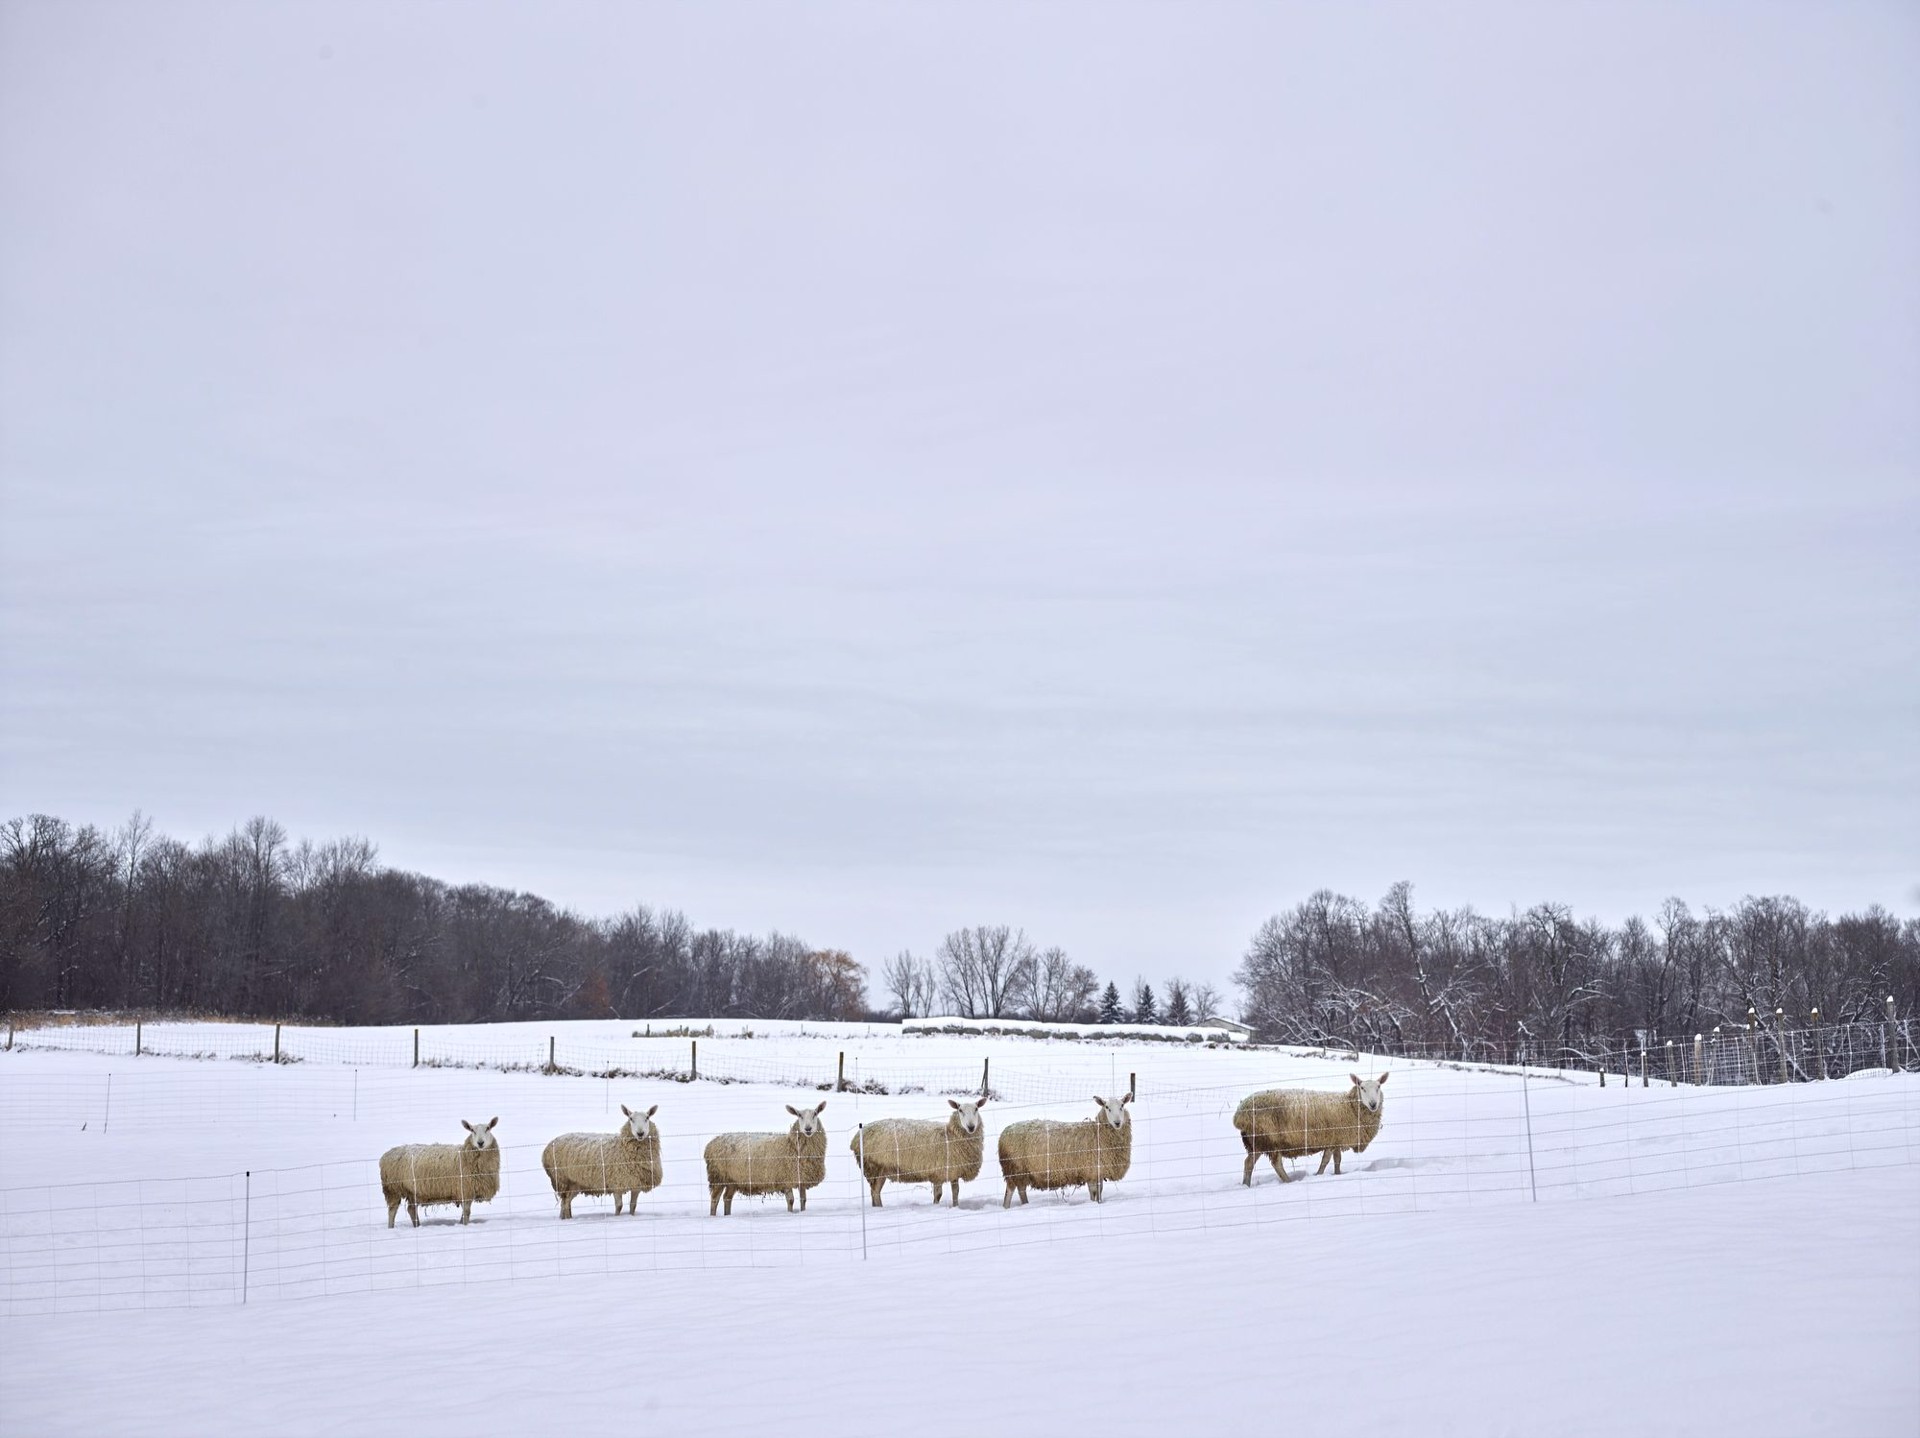 Counting Sheep, Hennepin County, Minnesota, USA, 2/10 by R. J. Kern